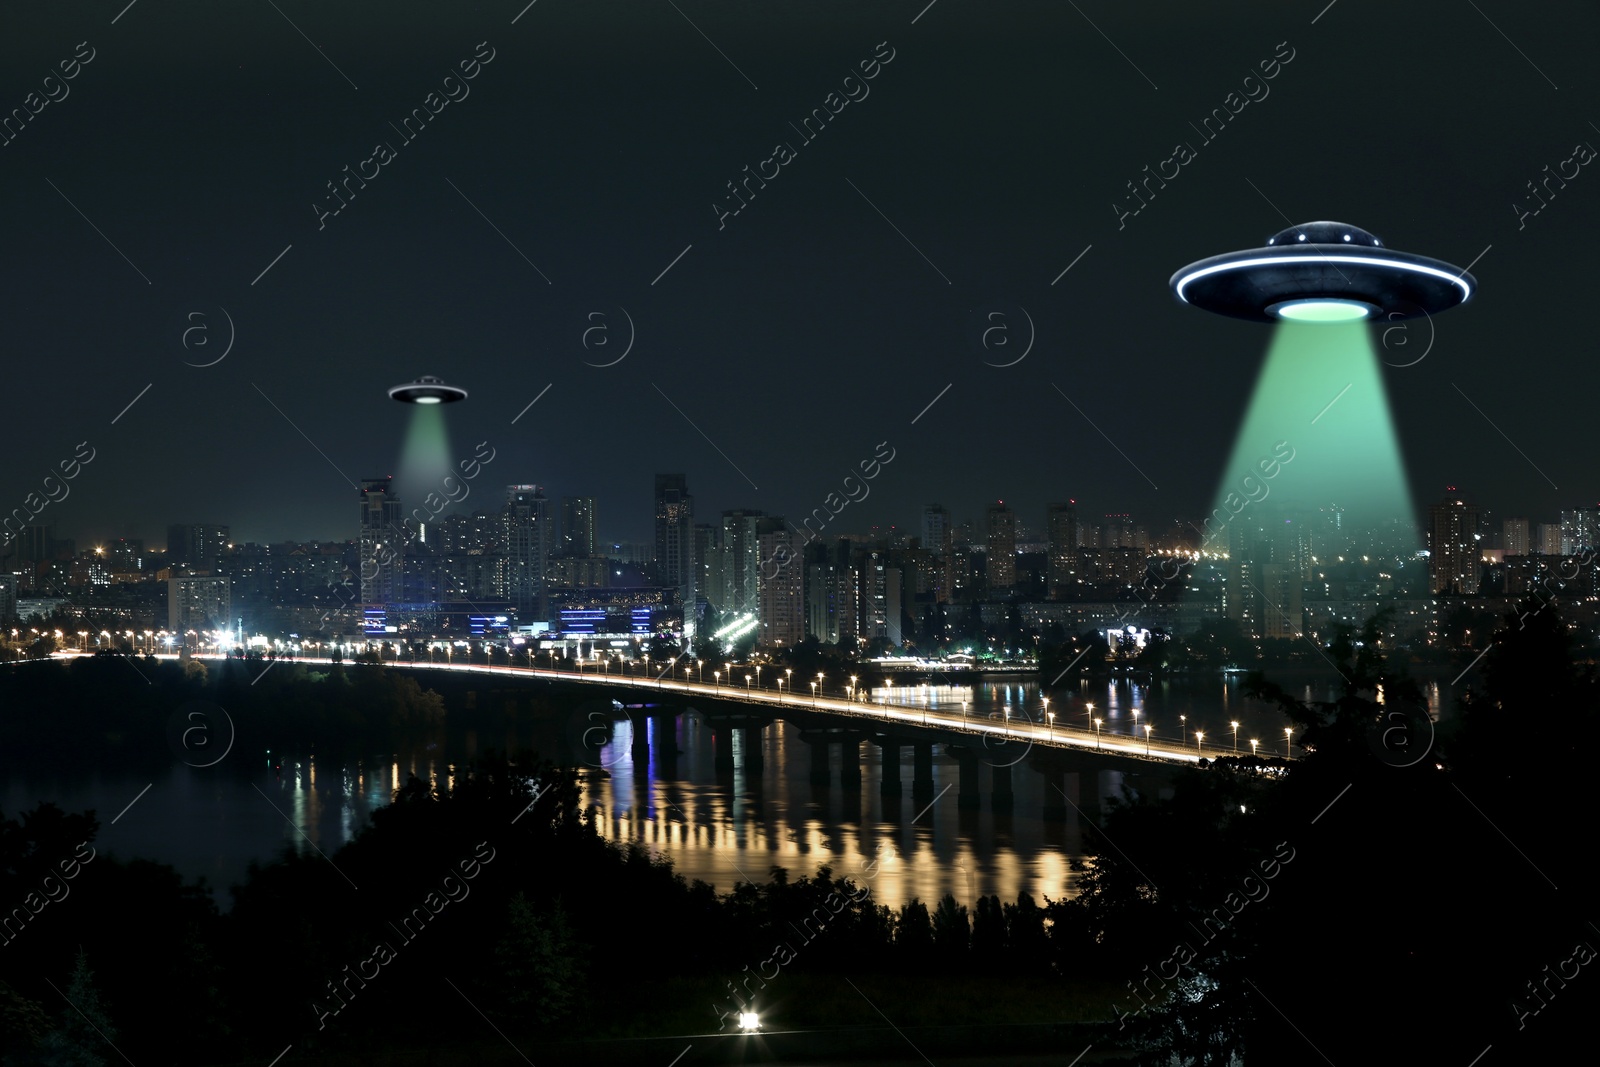 Image of UFO. Alien spaceships emitting light beams over night city